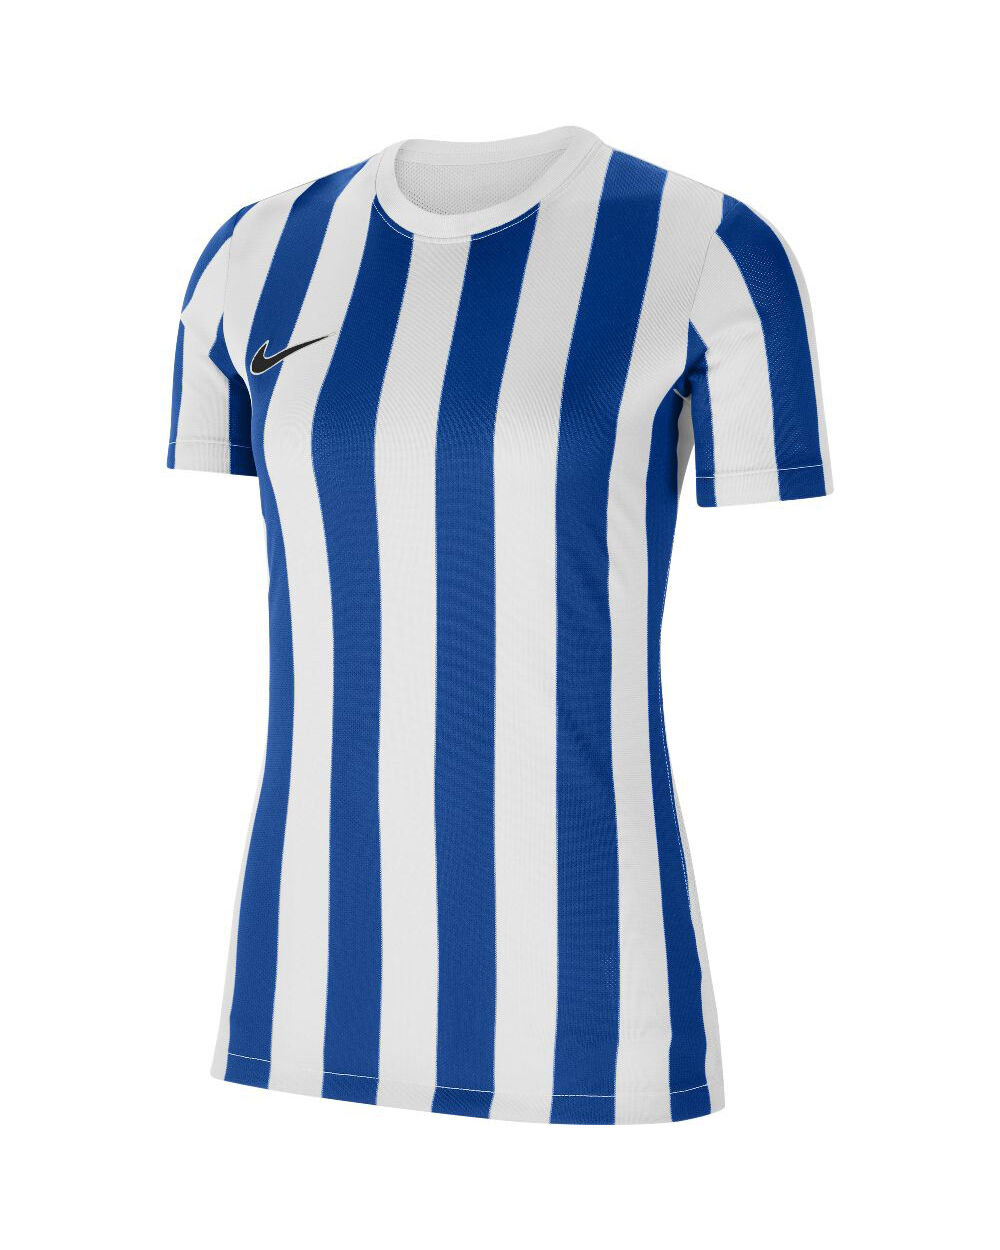 Nike Maglia Striped Division IV Blu Bianco e Reale per Donne CW3816-102 XL